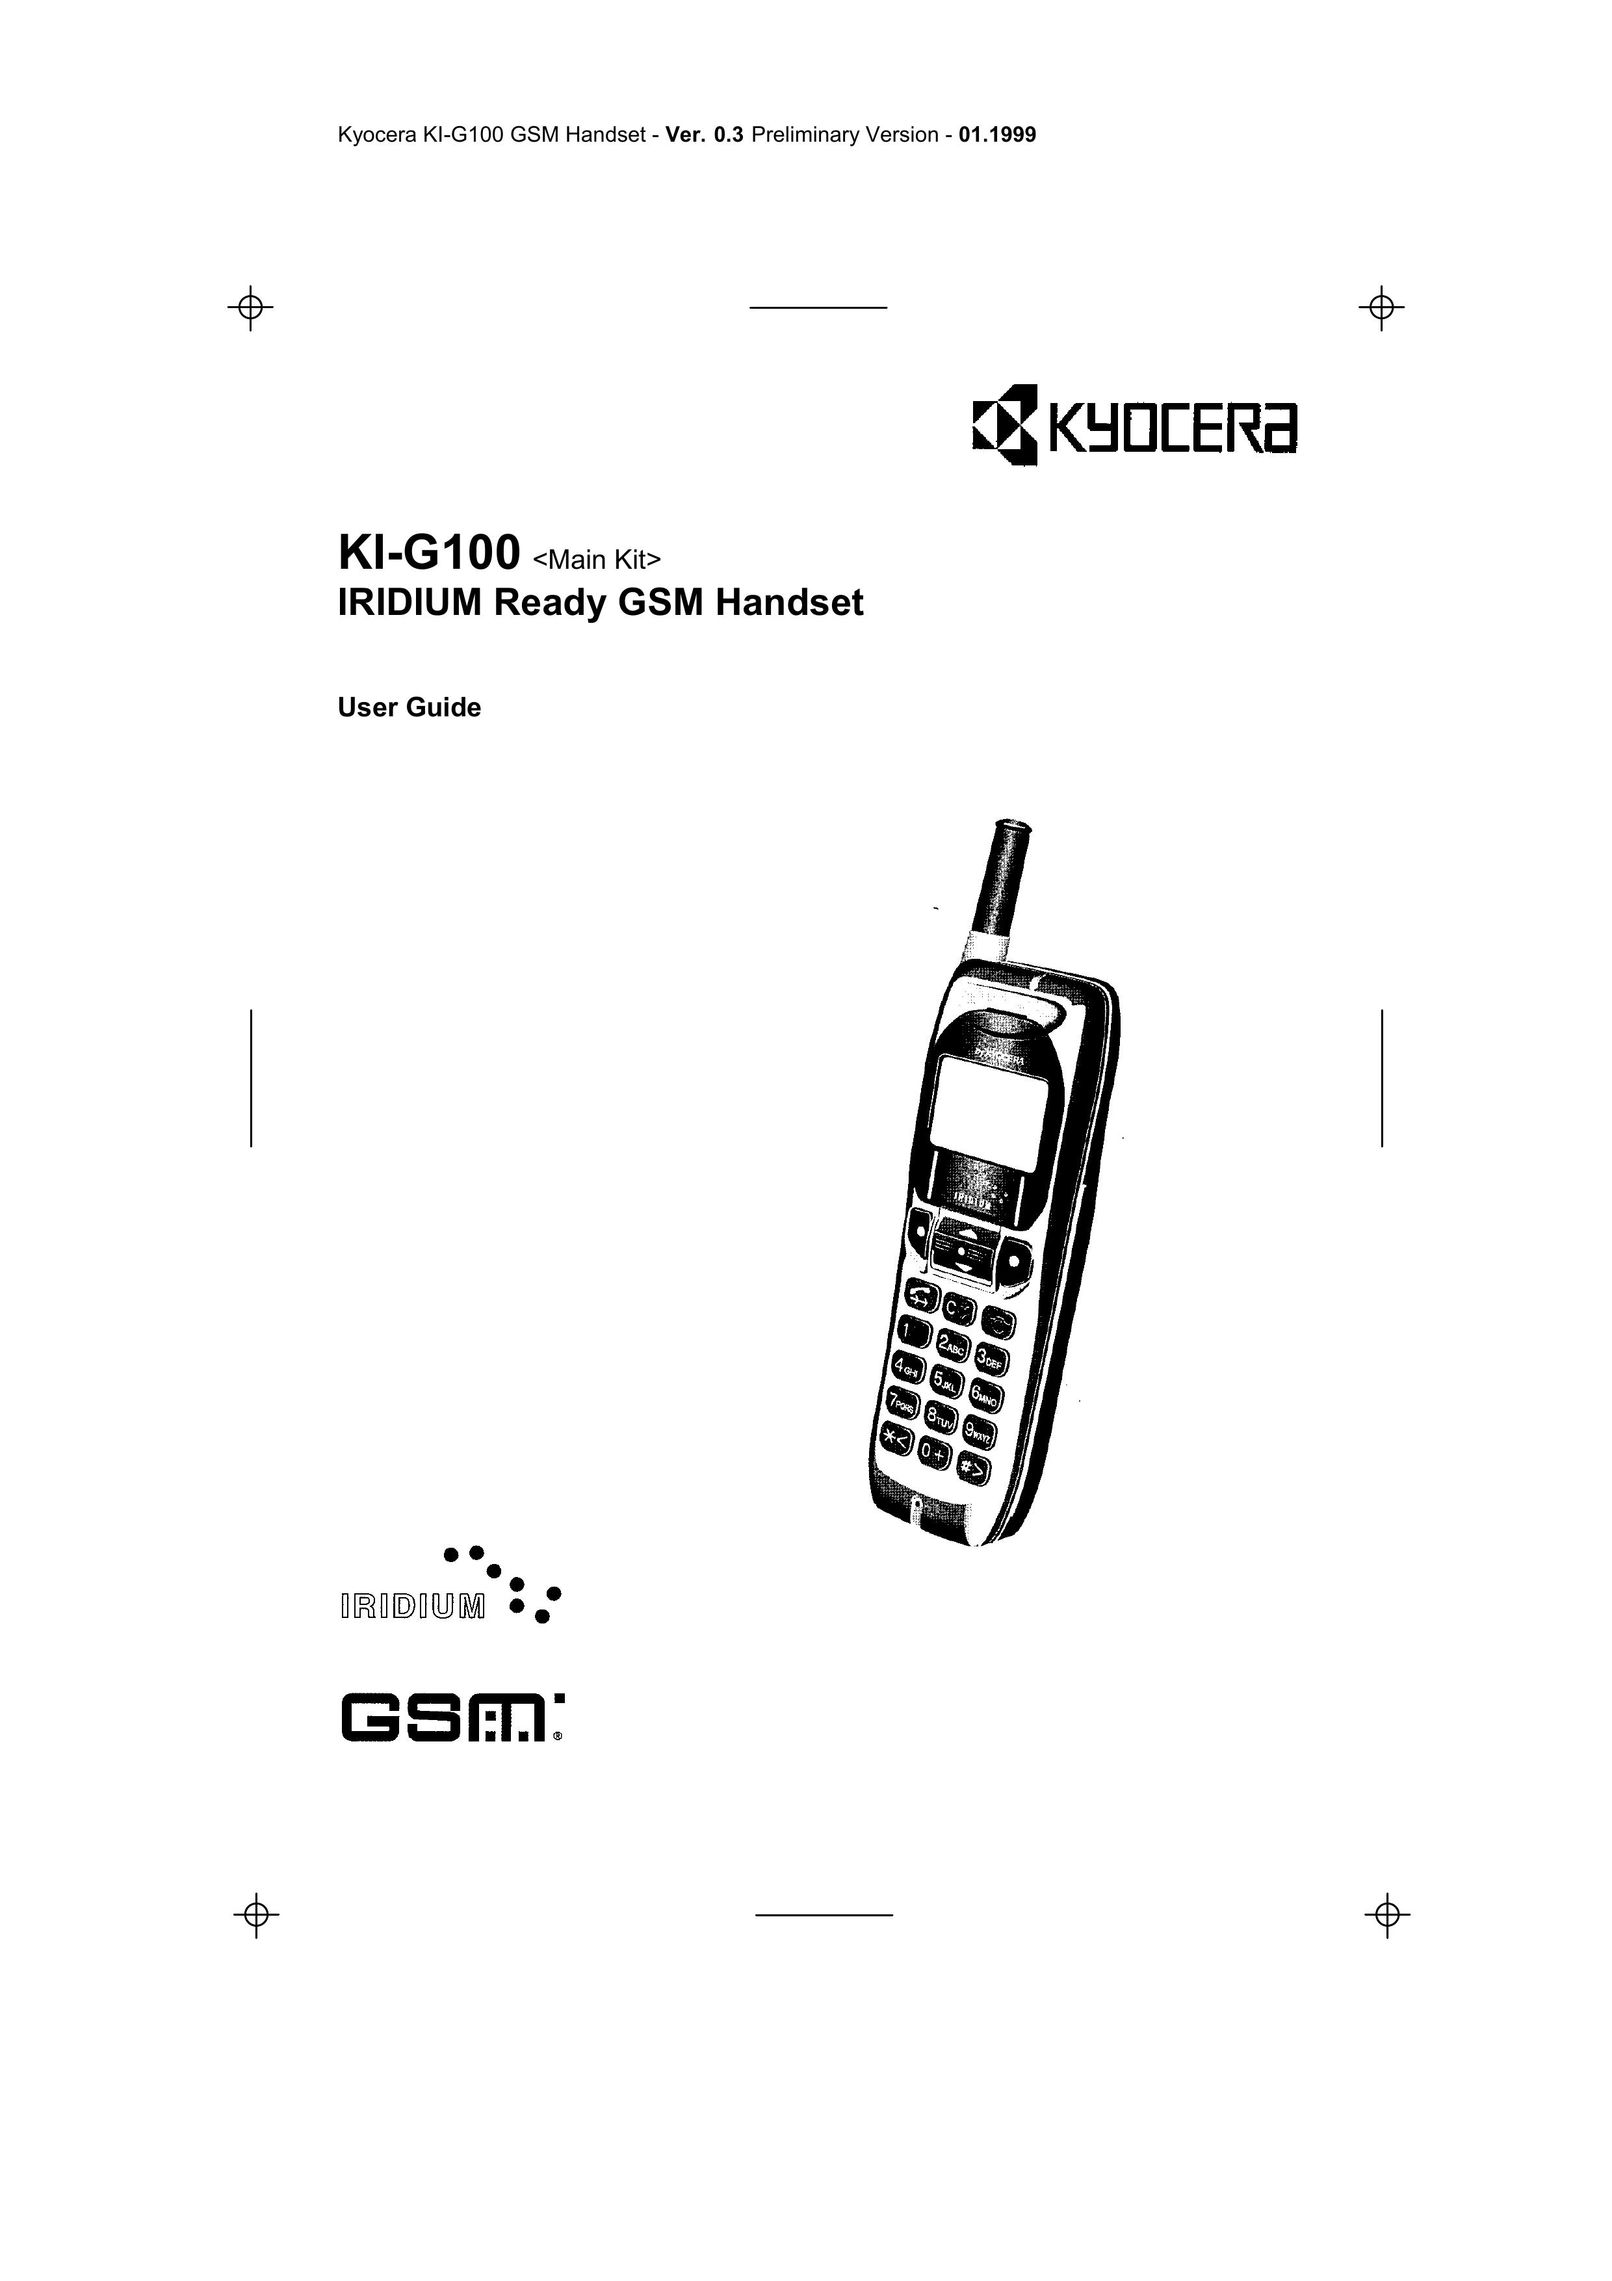 Kyocera KI-G100 Telephone User Manual